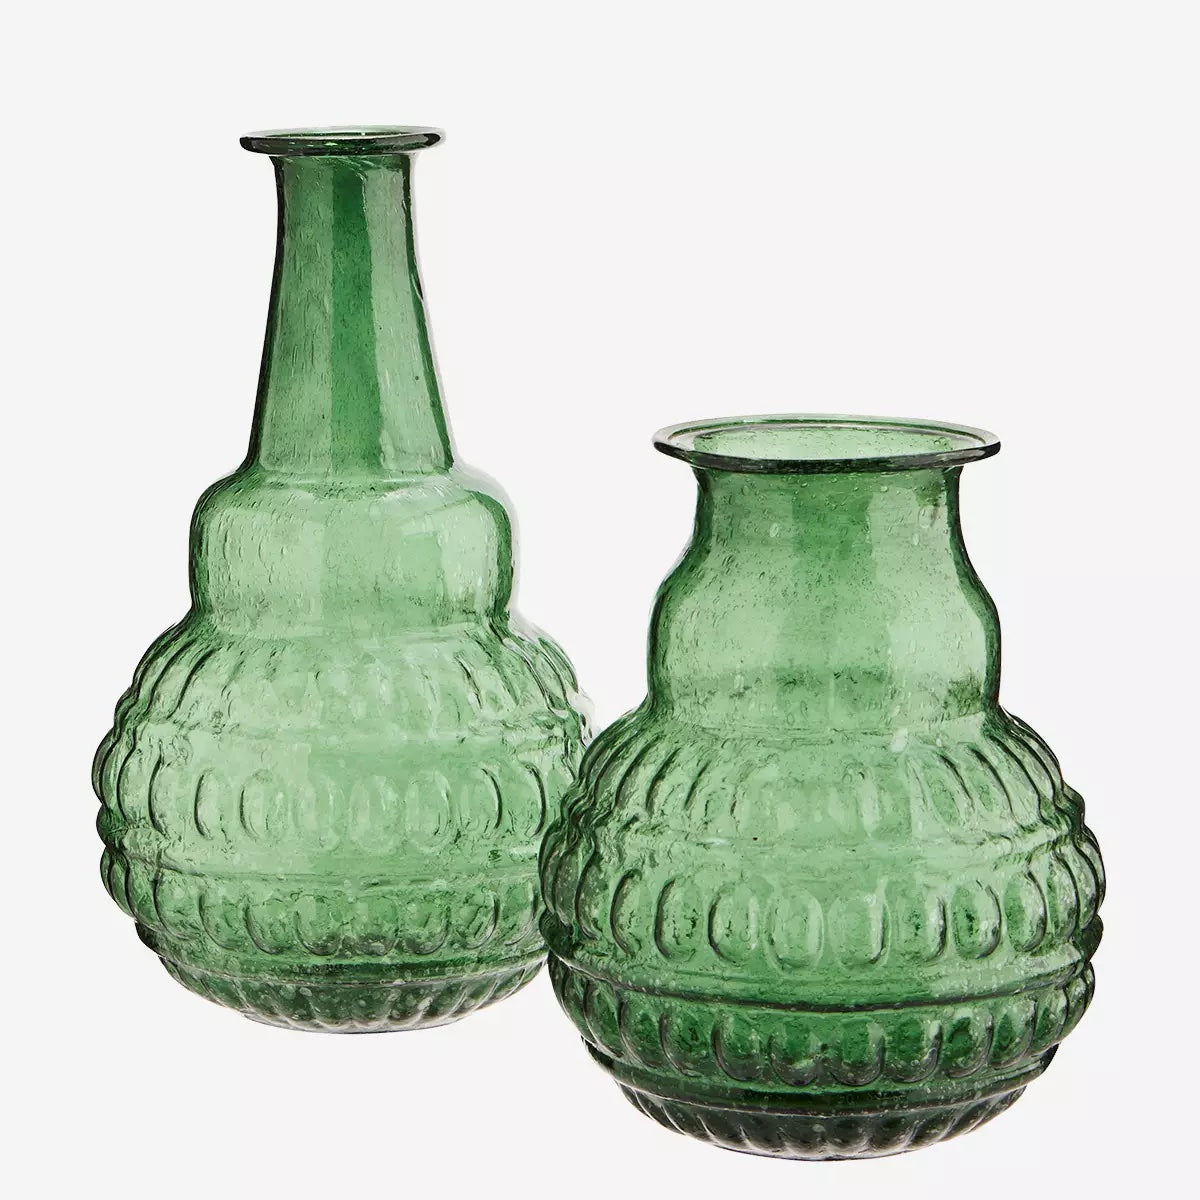 Recycled Glass Vase D:10x20 Green - LEEF mode en accessoires